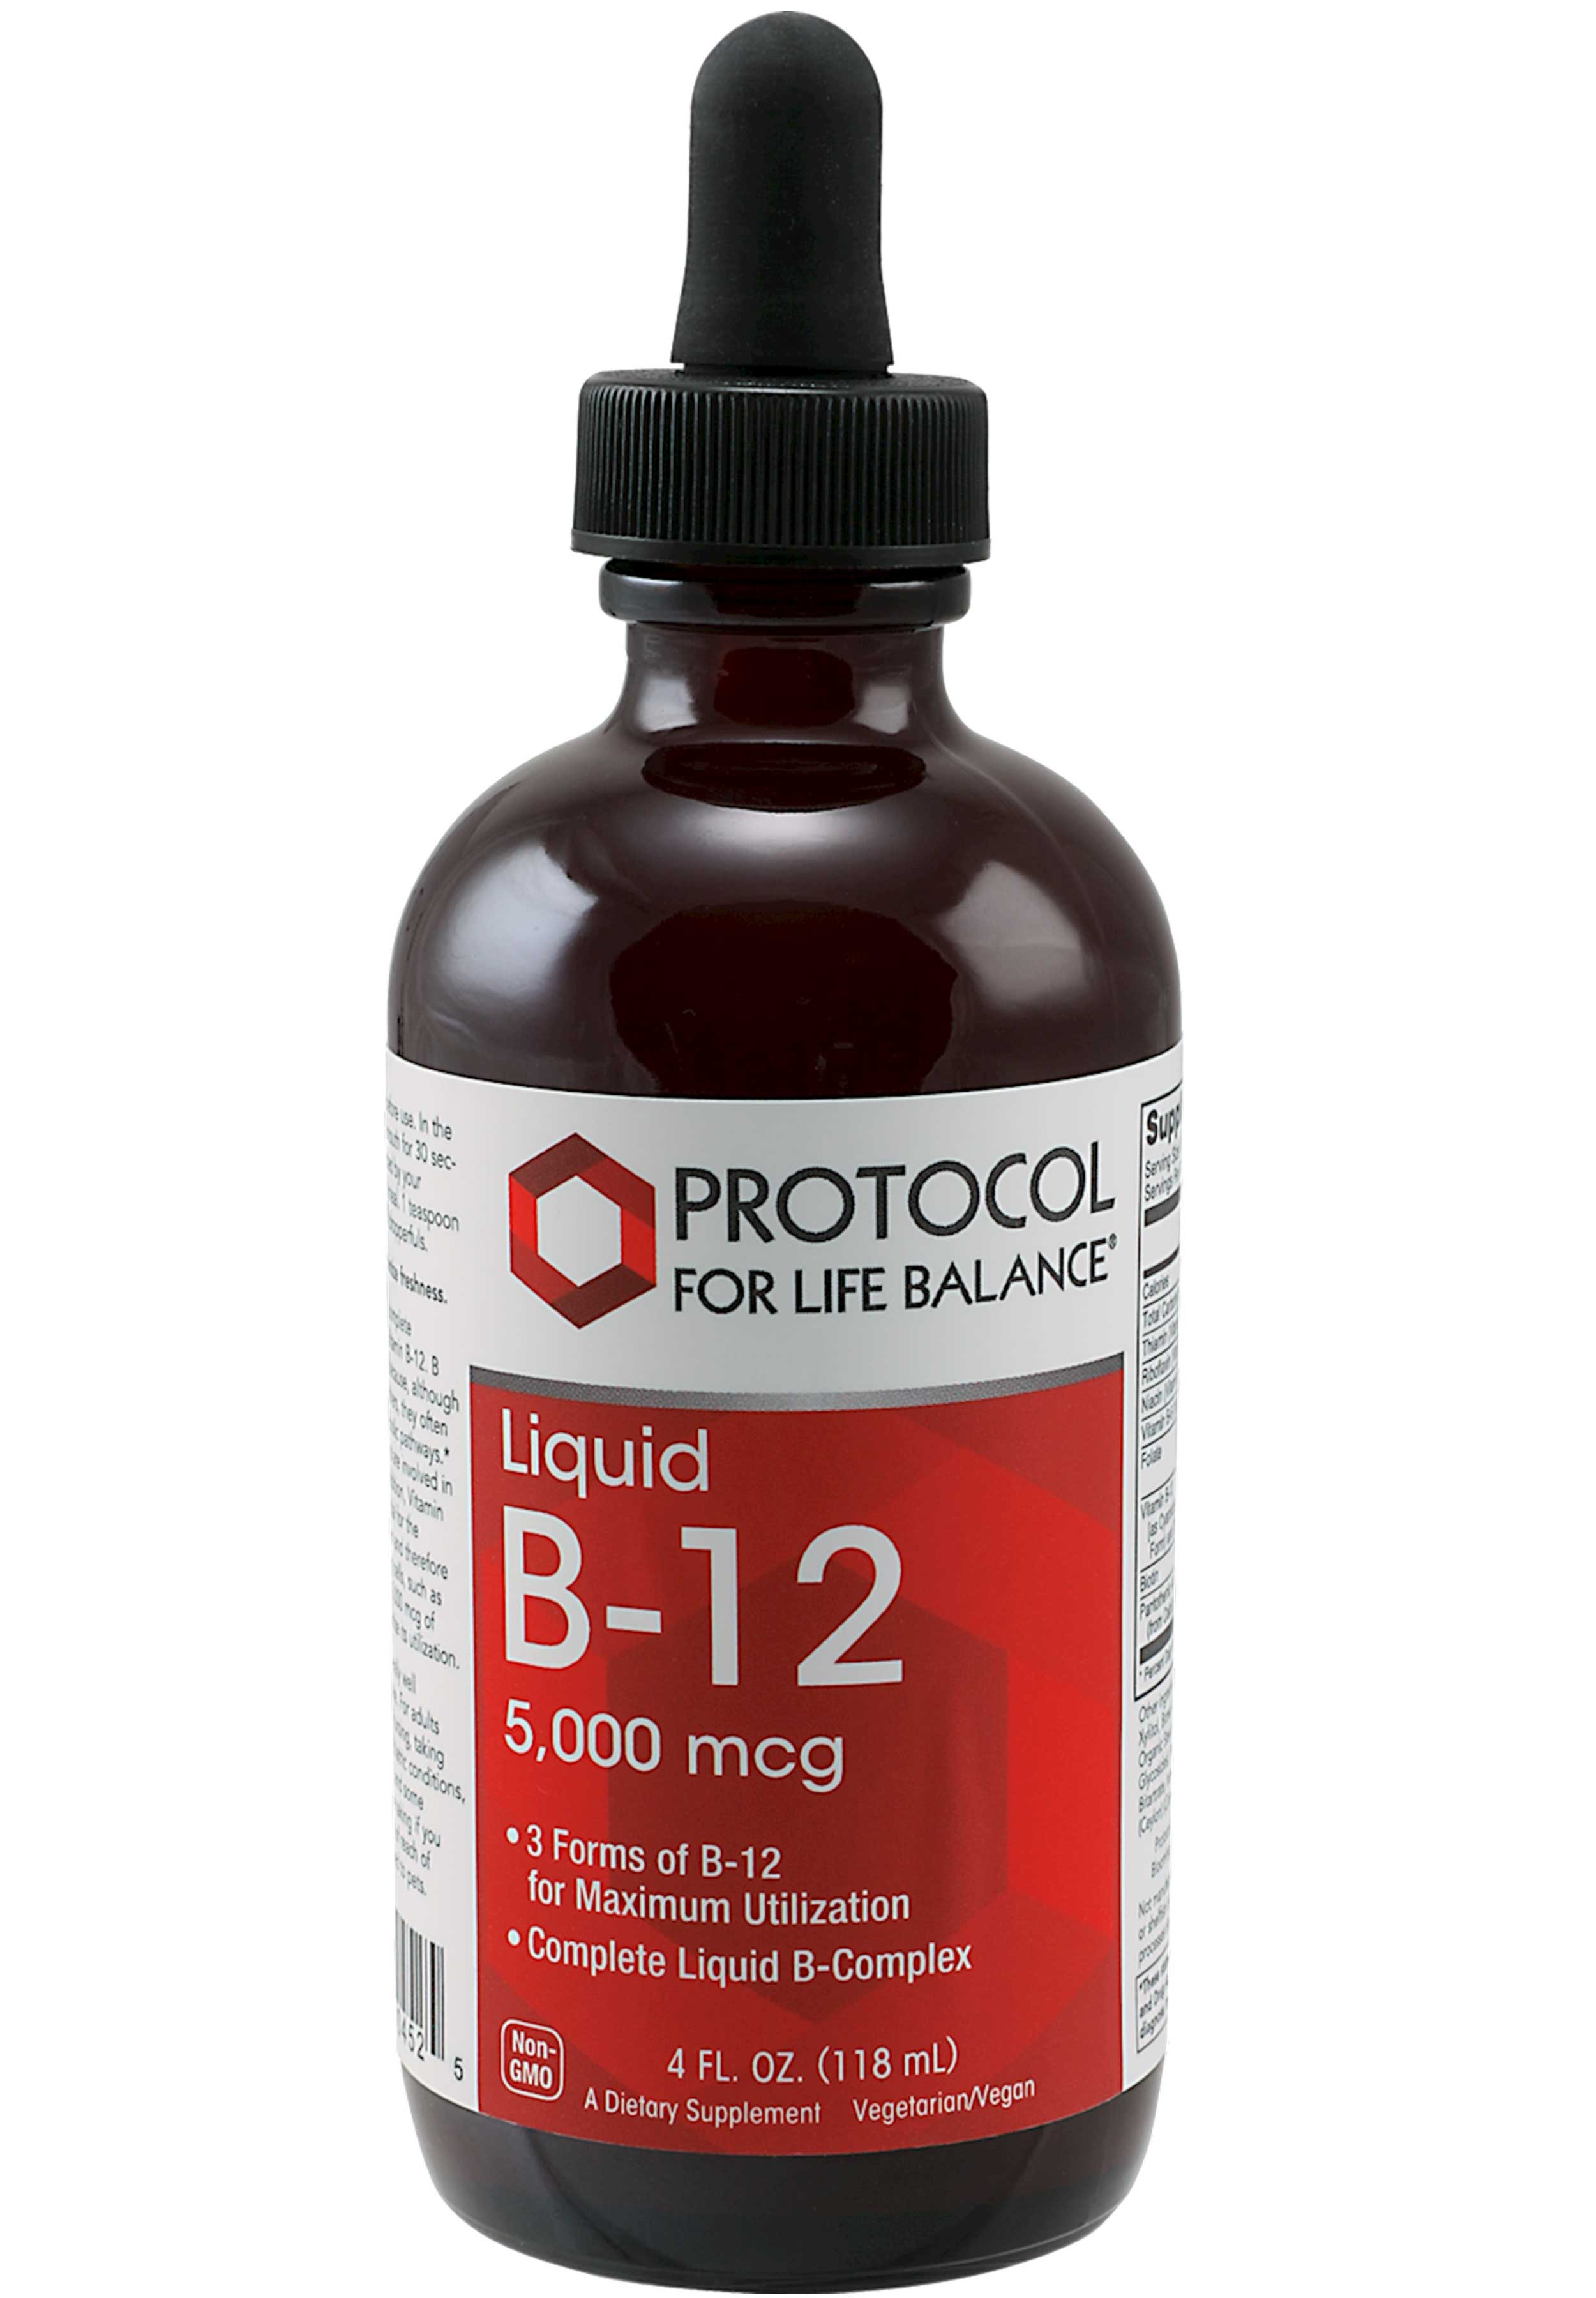 Protocol for Life Balance Liquid B-12 5,000 mcg